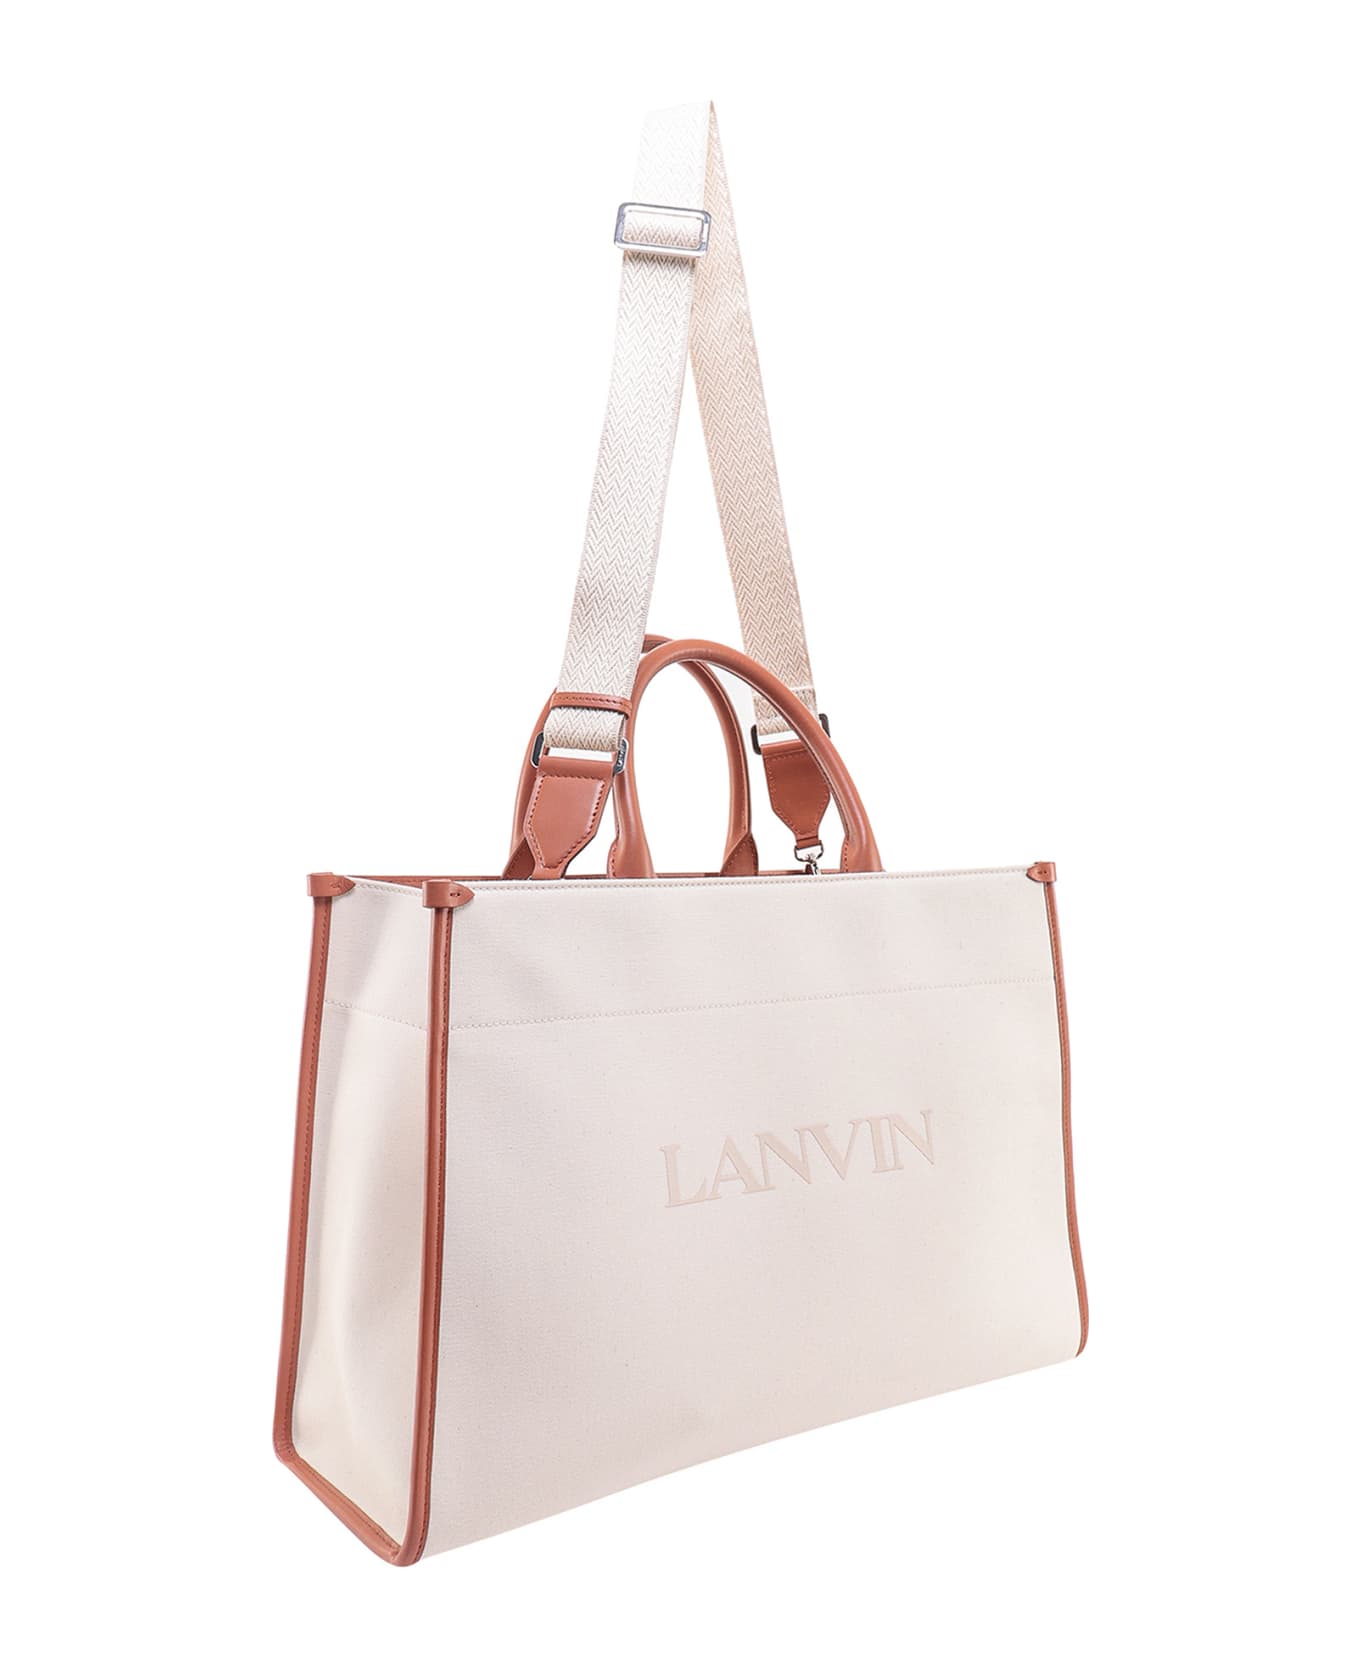 Lanvin Handbag - Beige